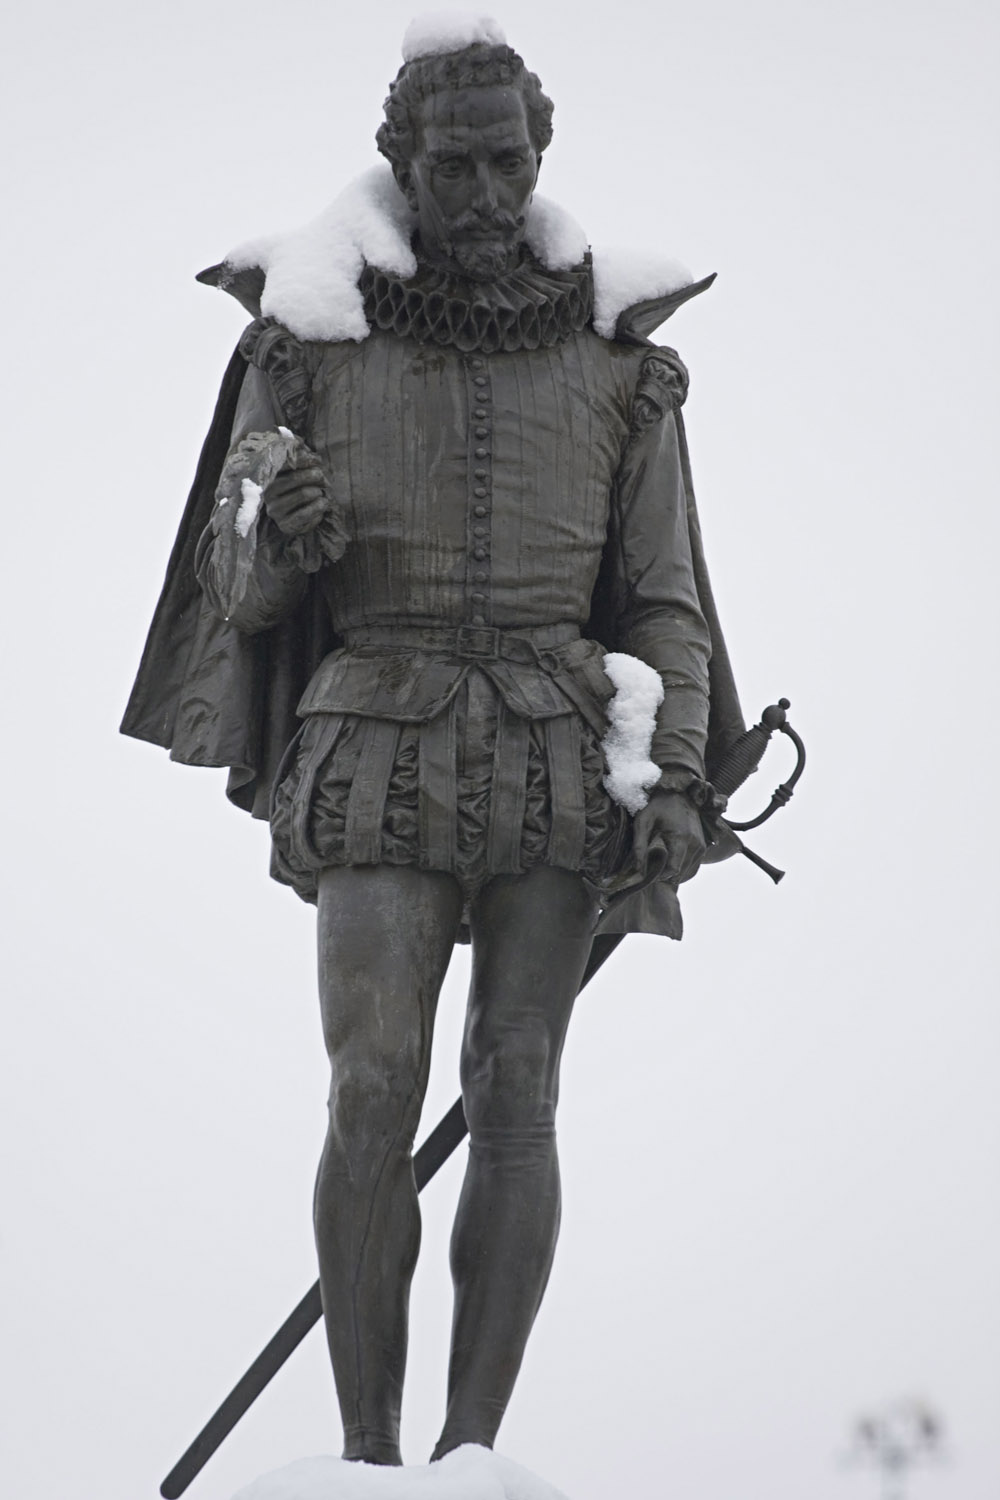 Estatua nevada en la Plaza Cervantes de Alcalá de Henares